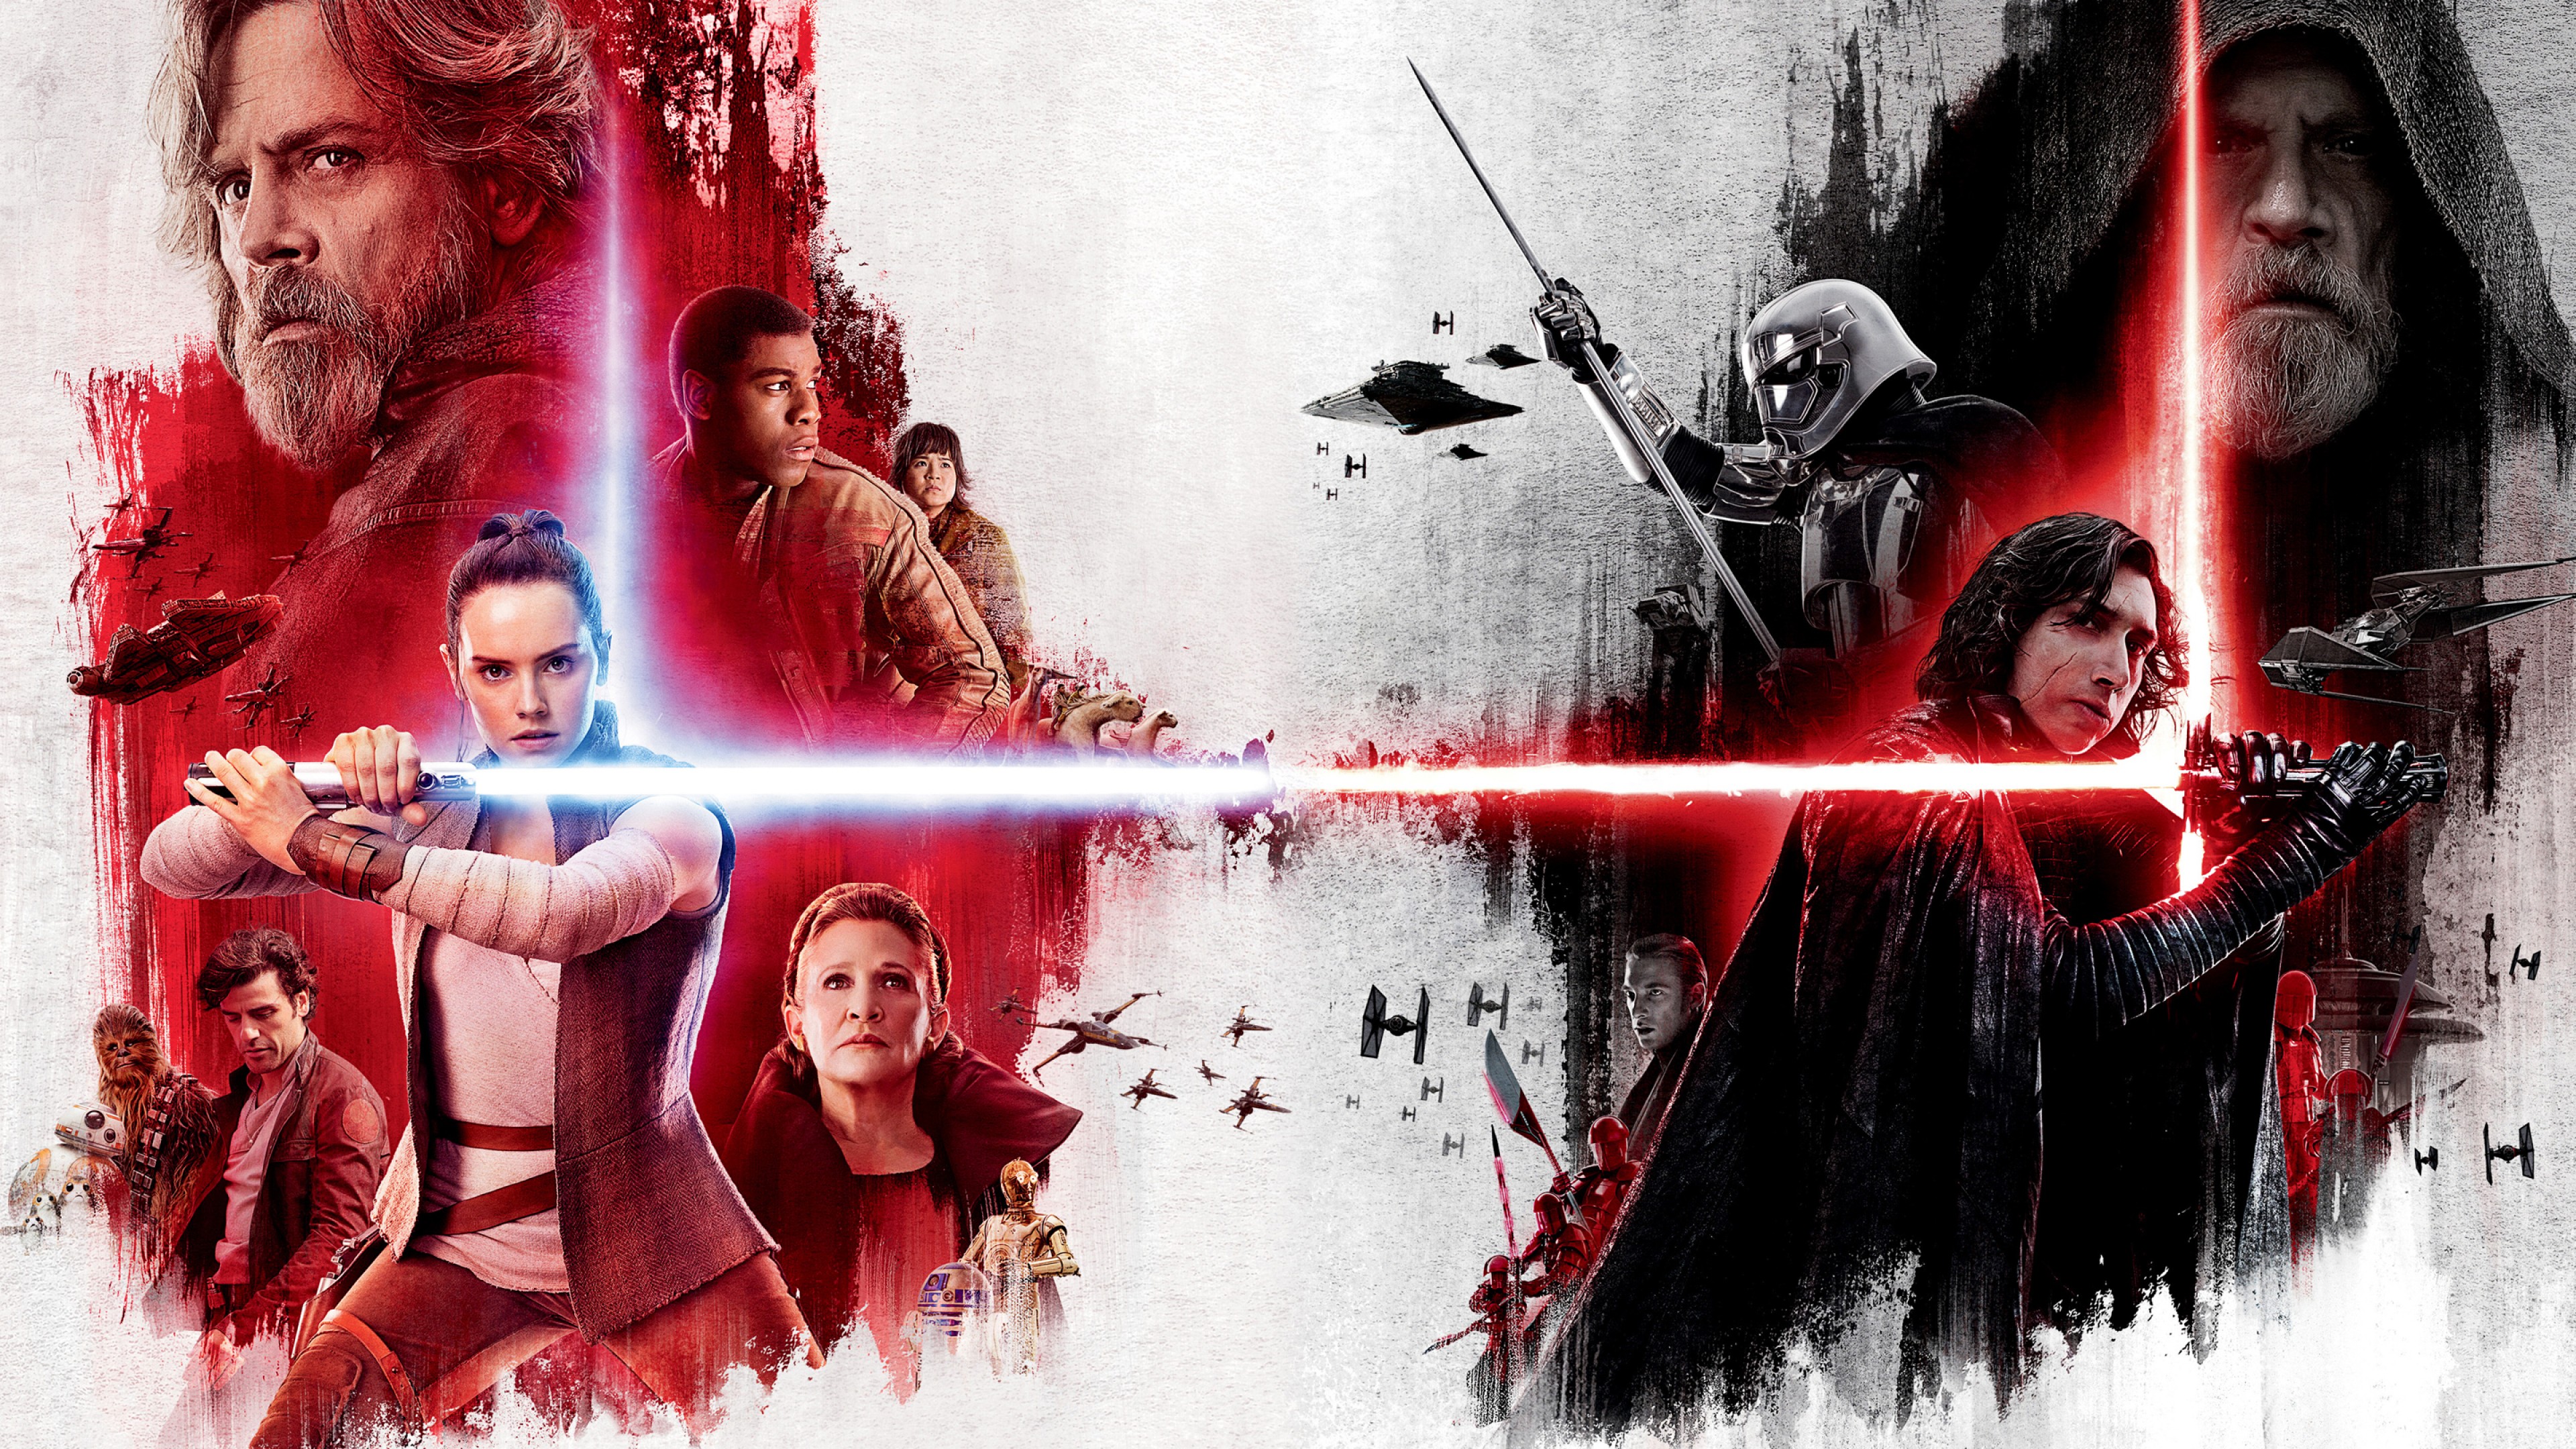 Star Wars The Last Jedi HD Wallpaper For Desktop And Mobiles 4k